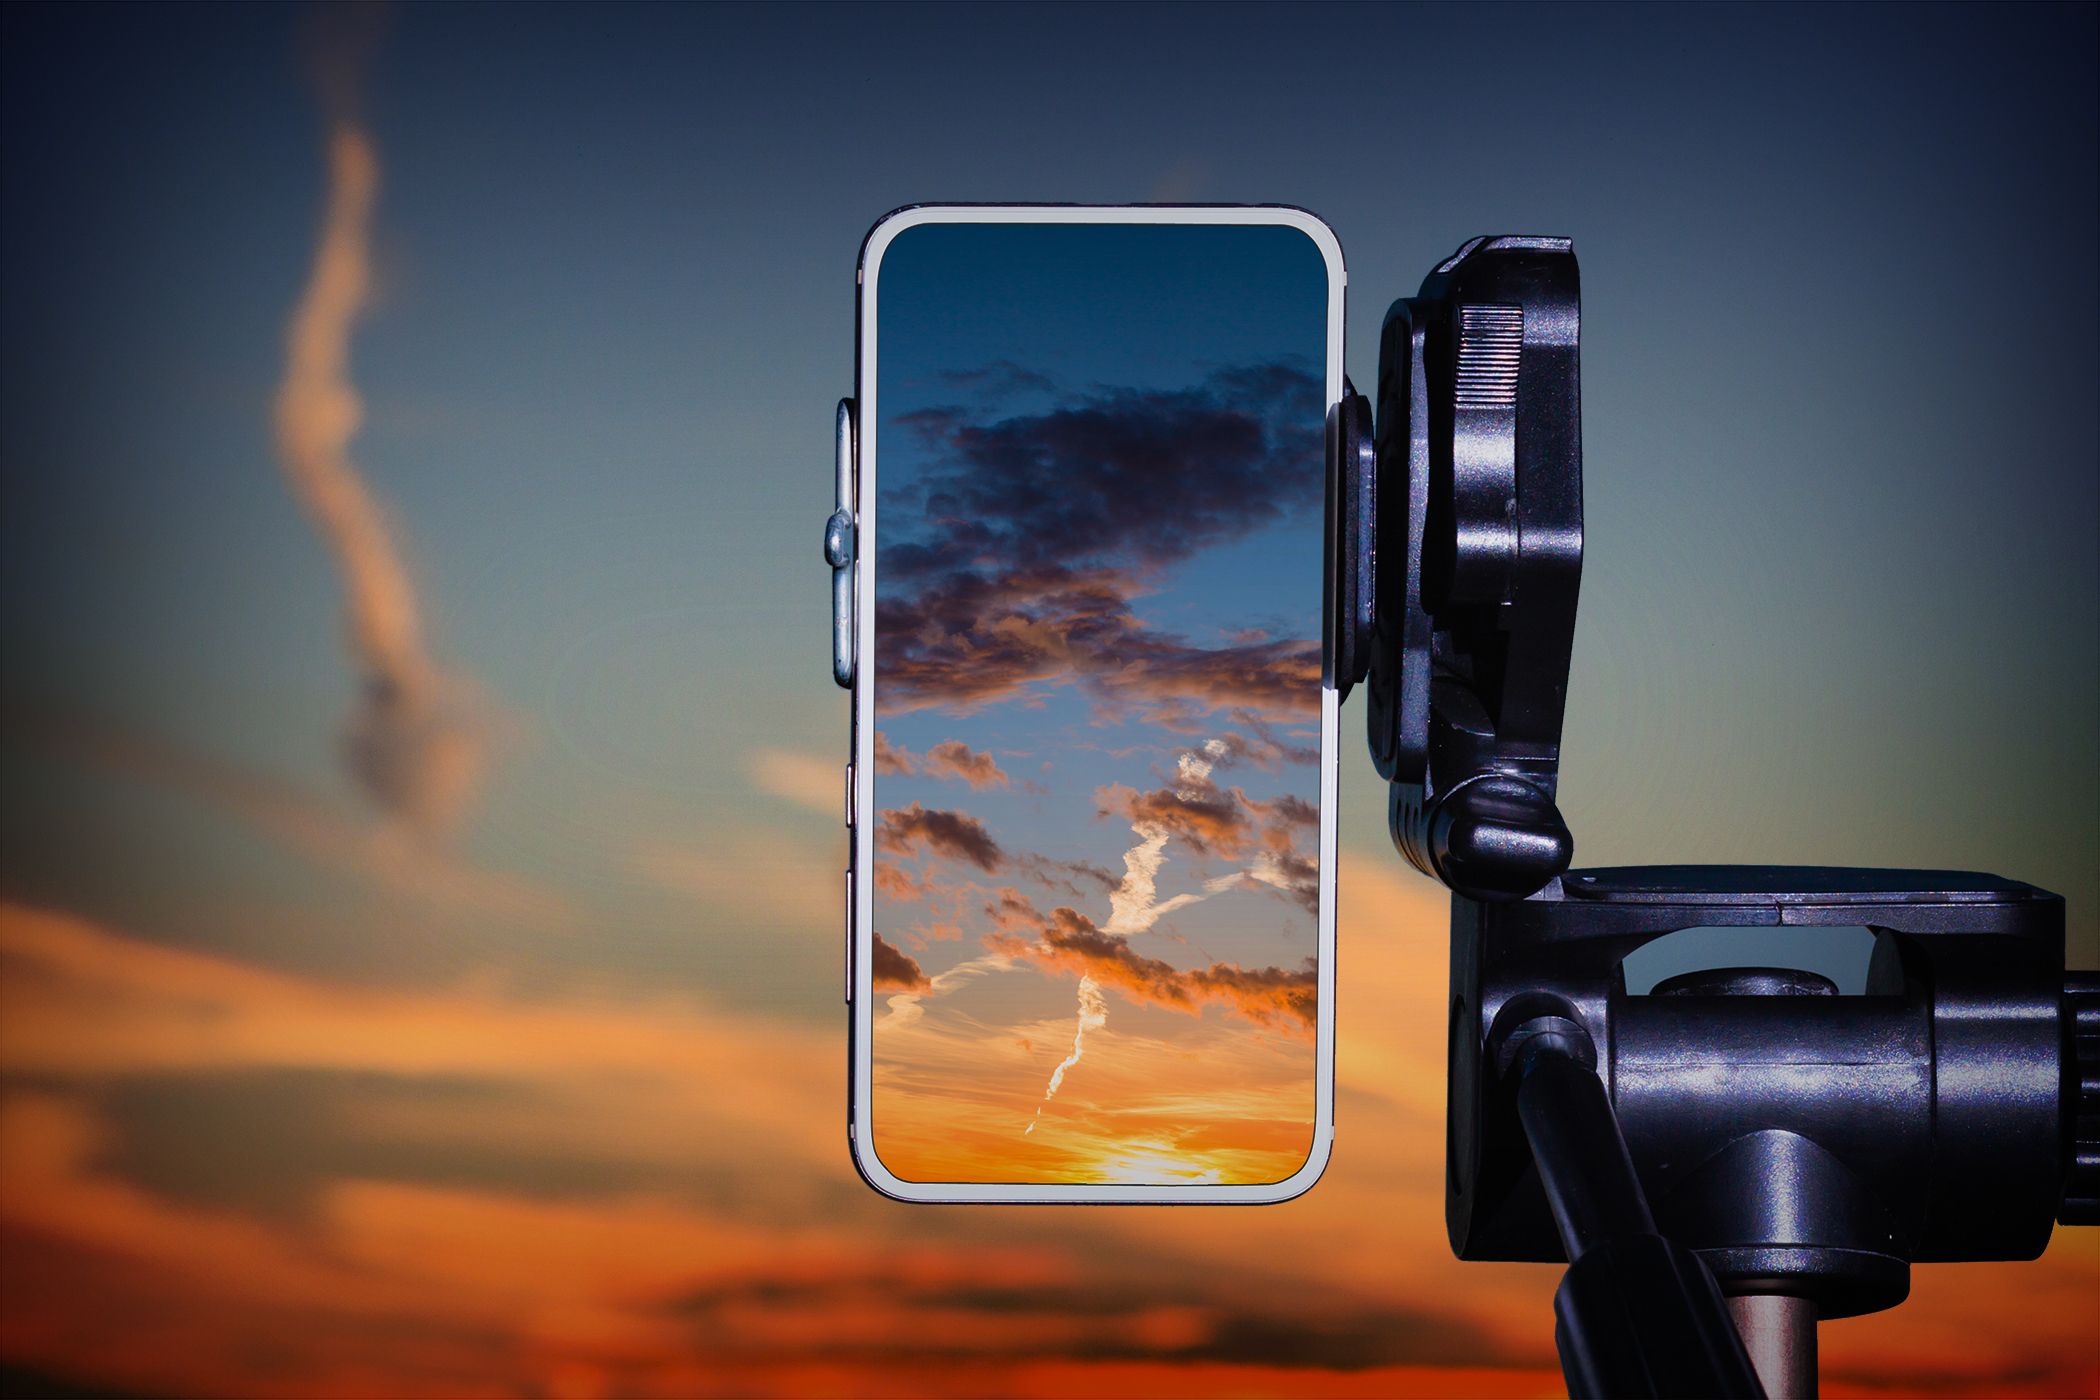 A smartphone on a tripod capturing a scenery